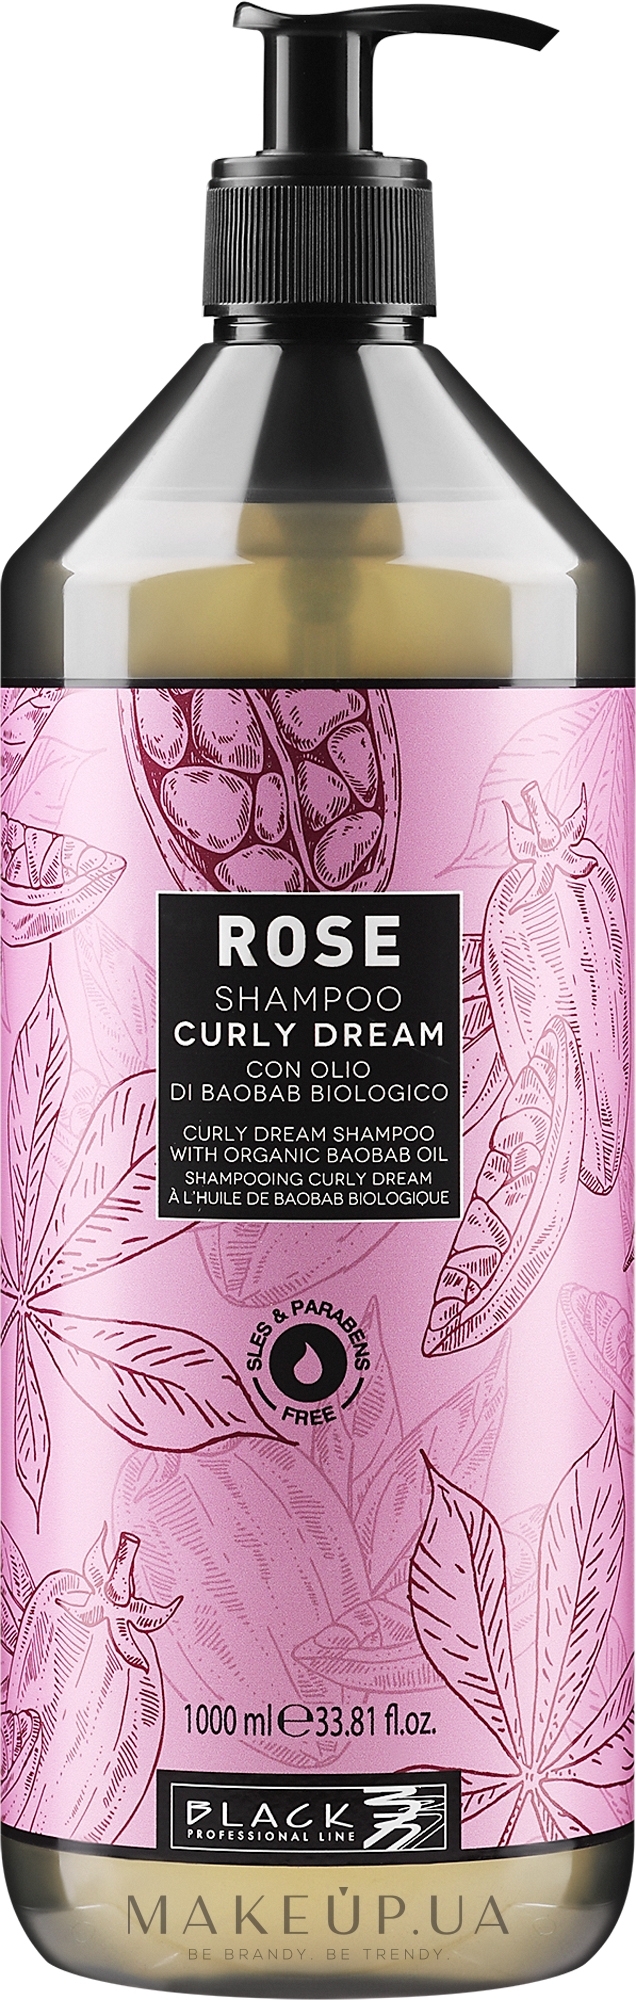 Шампунь для волос - Black Professional Line Rose Shampoo Curly Dream  — фото 1000ml